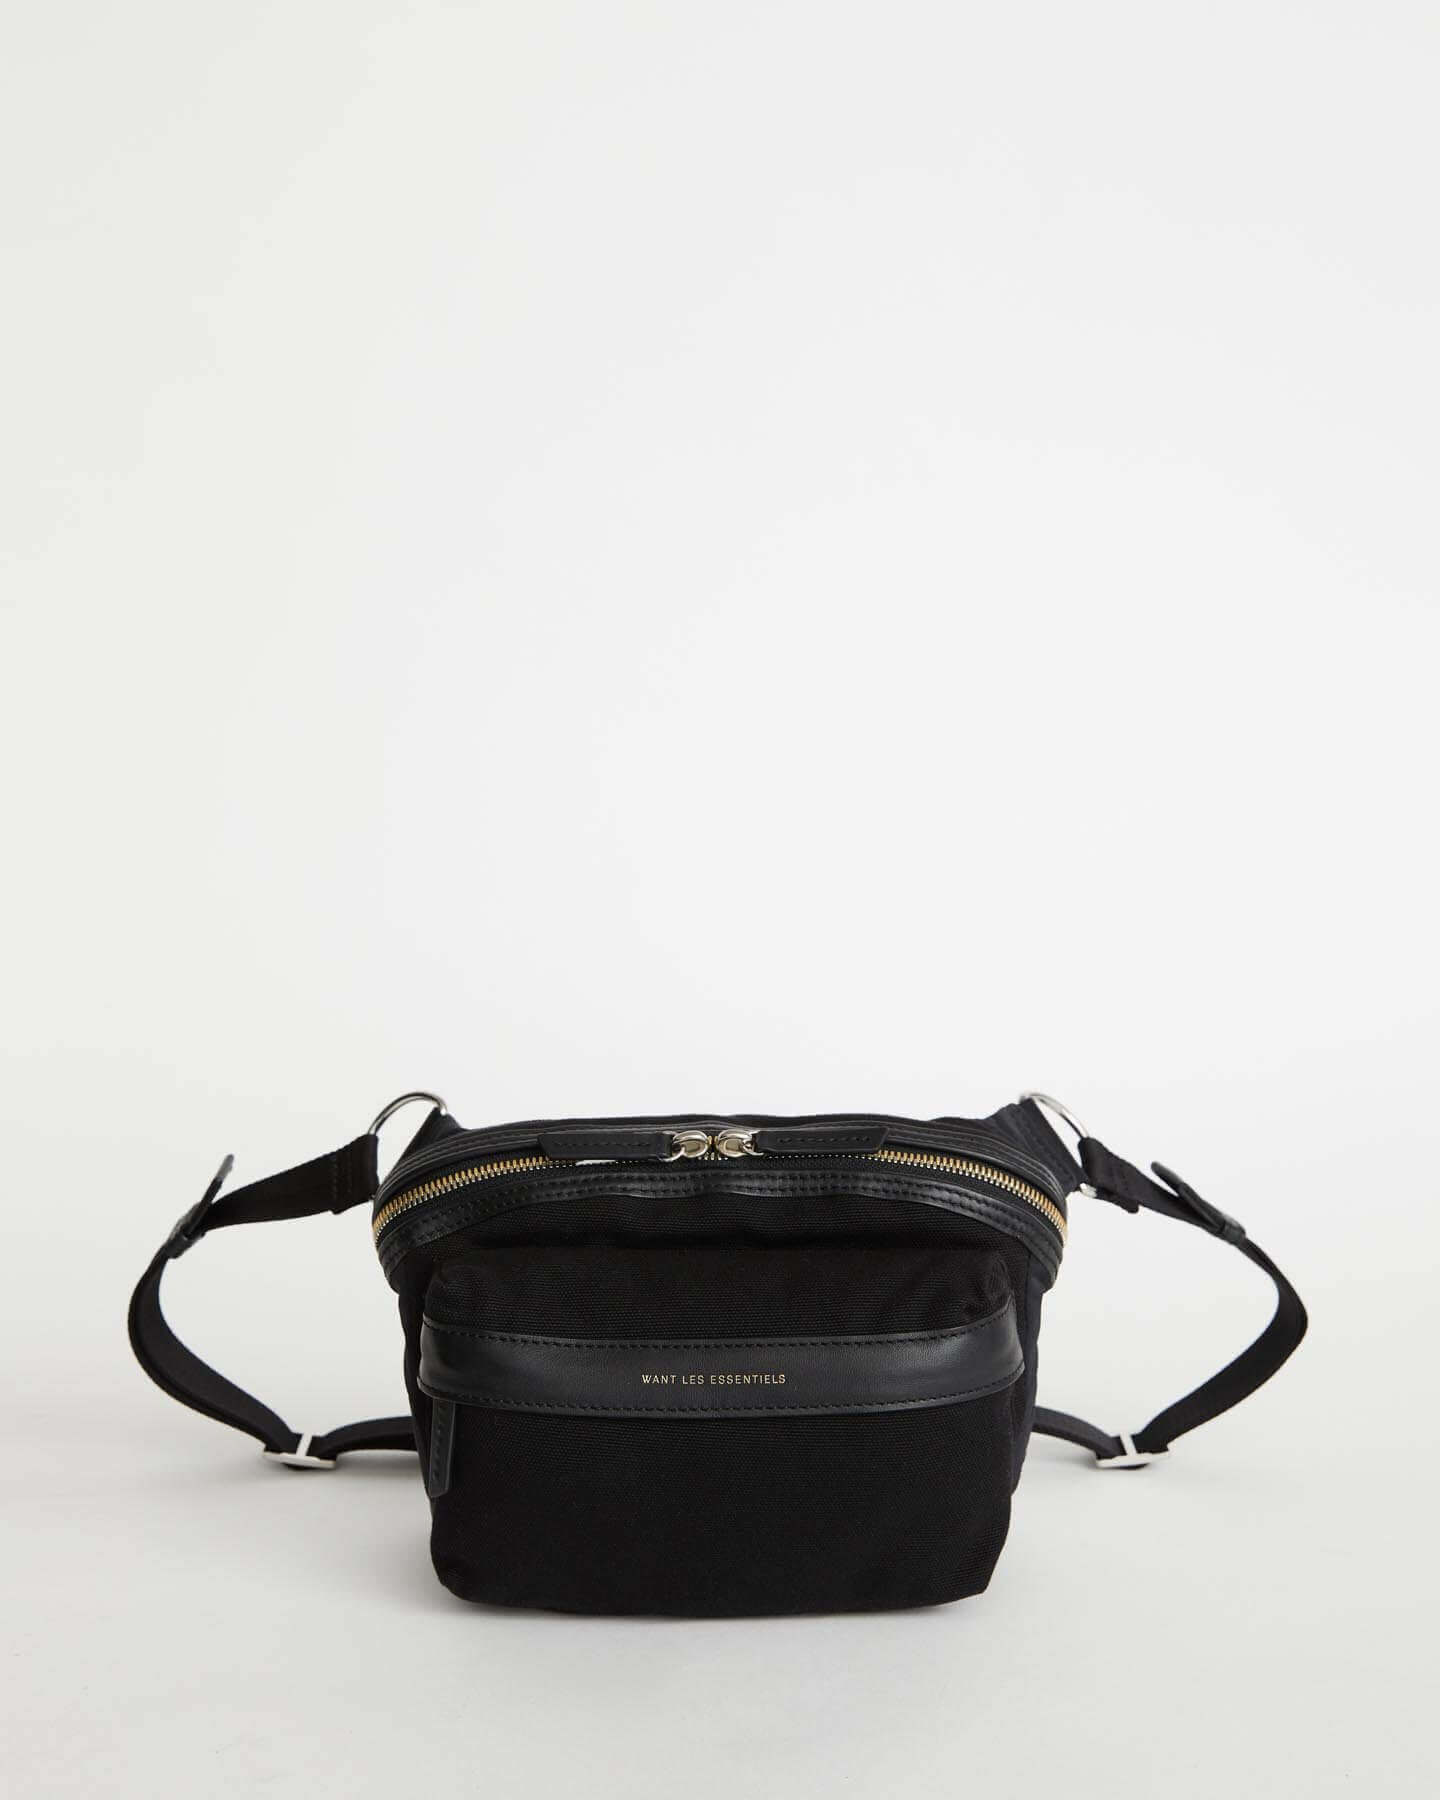 Everyone * needs a little black handbag. The Sela Pouch gives the